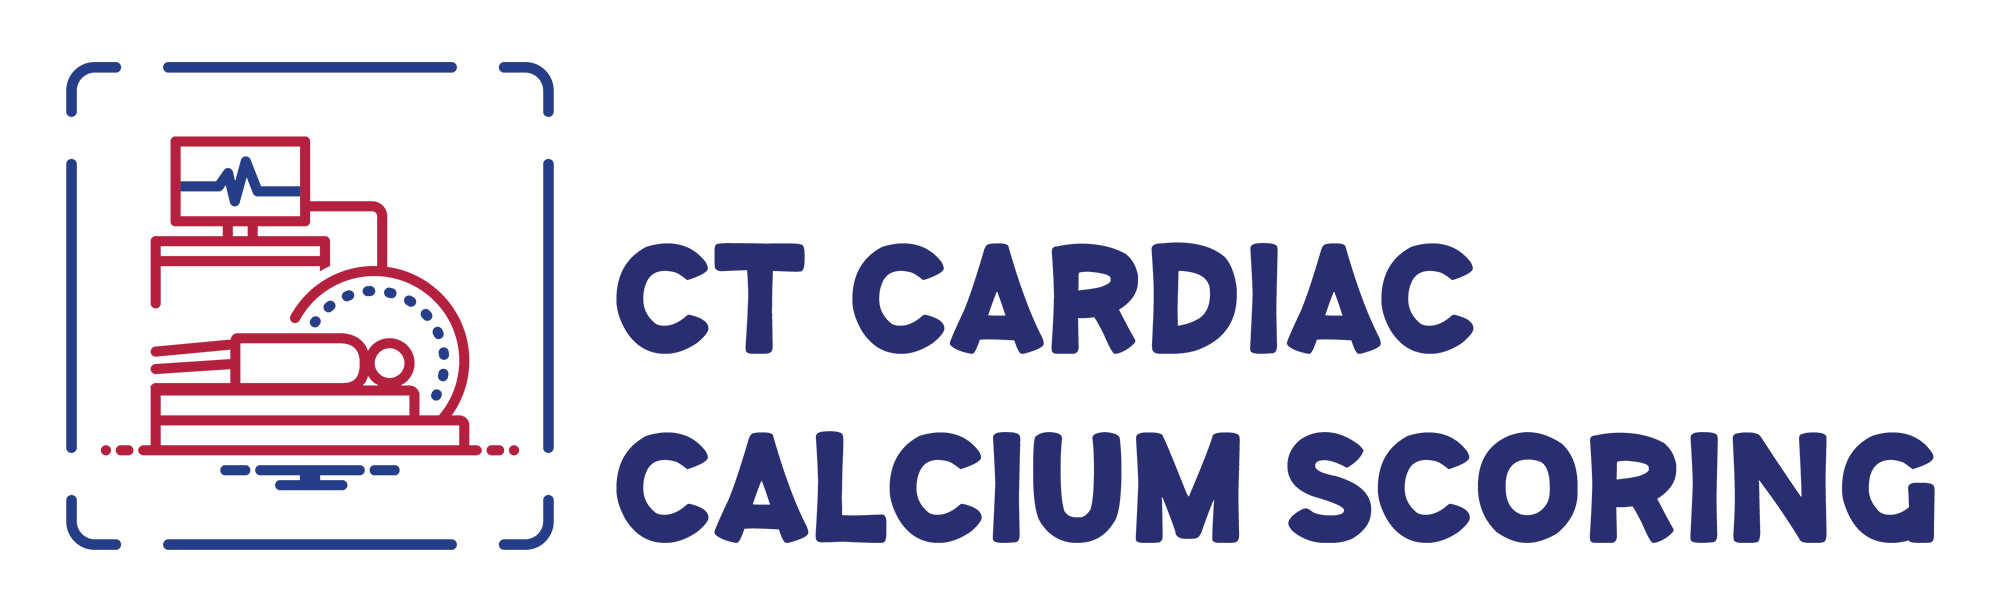 CT Cardiac Calcium Scoring, New Jersey Imaging Network